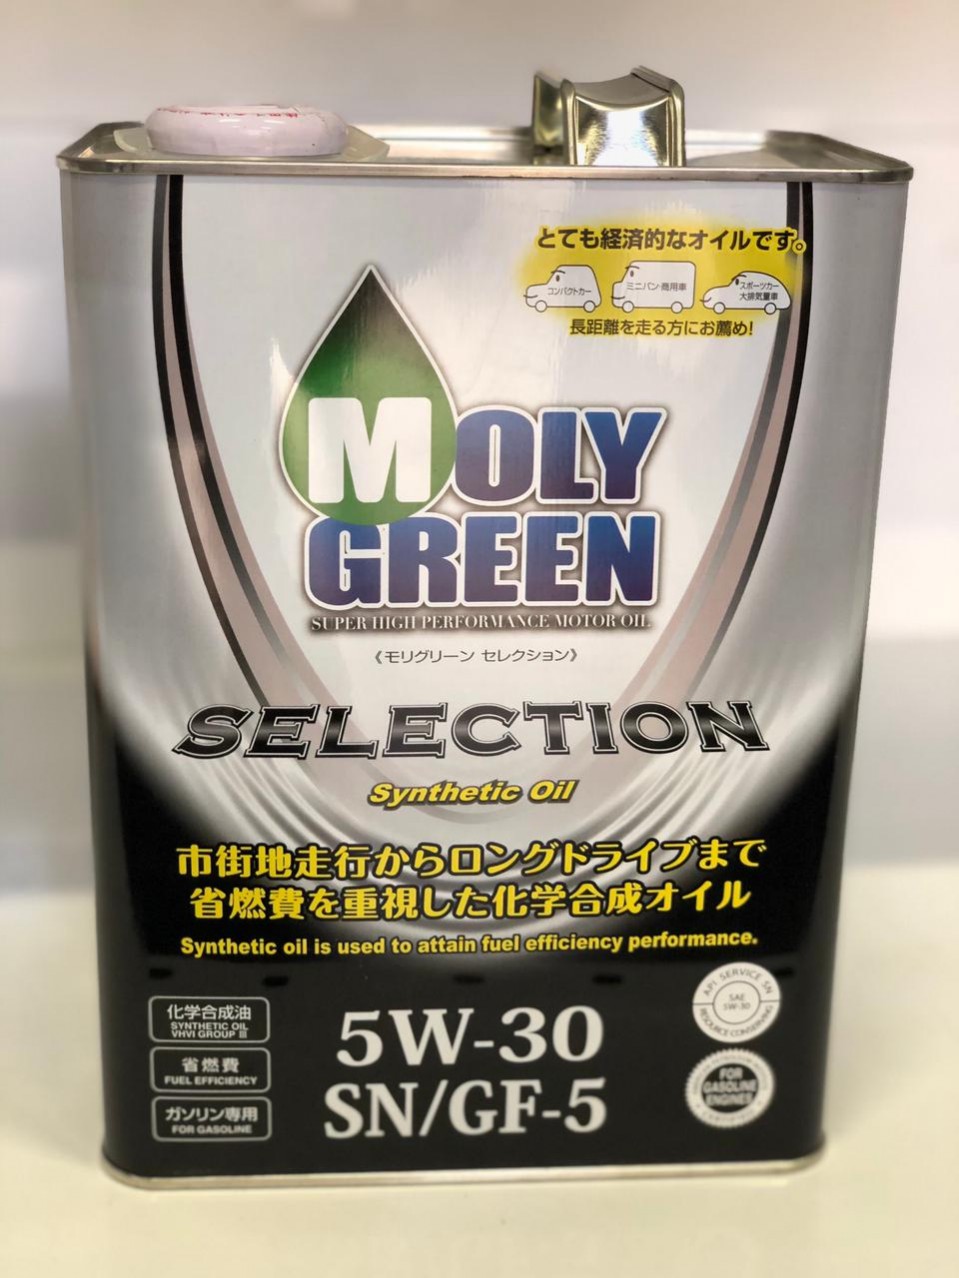 Моли грин 5w30 купить. Moly Green 5w30 selection. Масло моторное Moly Green selection 5w-30. Moly Green selection 5w30 4л 0470074. Moly Green selection 5w-30 исследование.